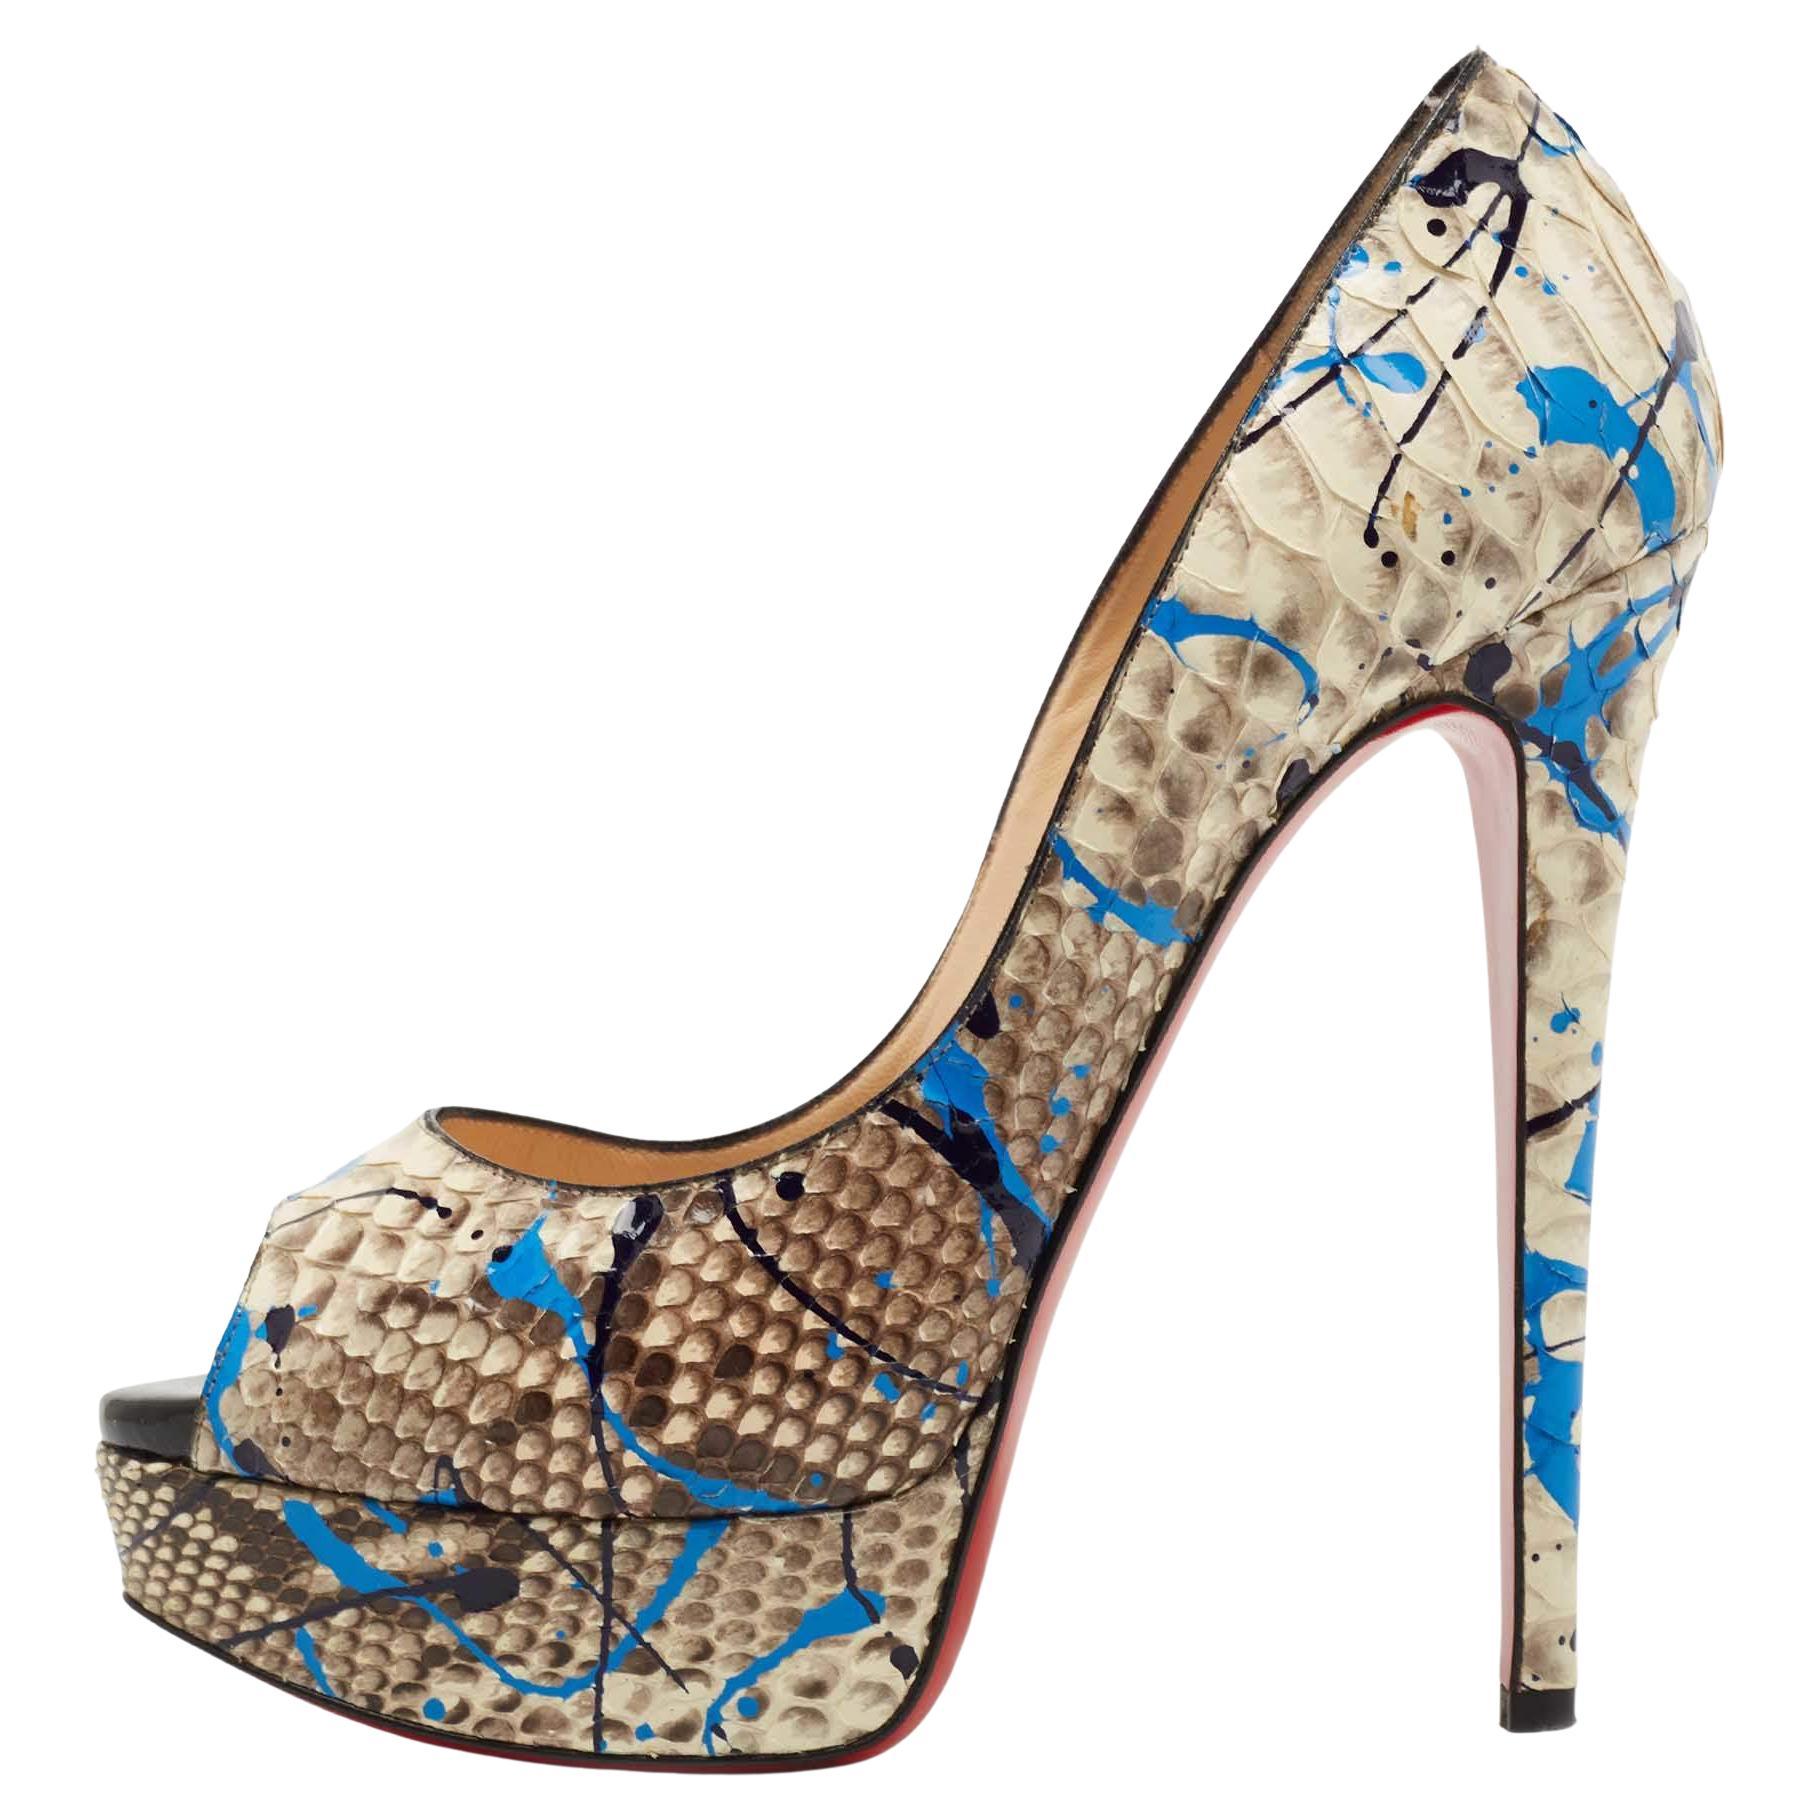 Christian Louboutin pumps size 34.5 BLACK enamel Pointed toe High heels  Stiletto